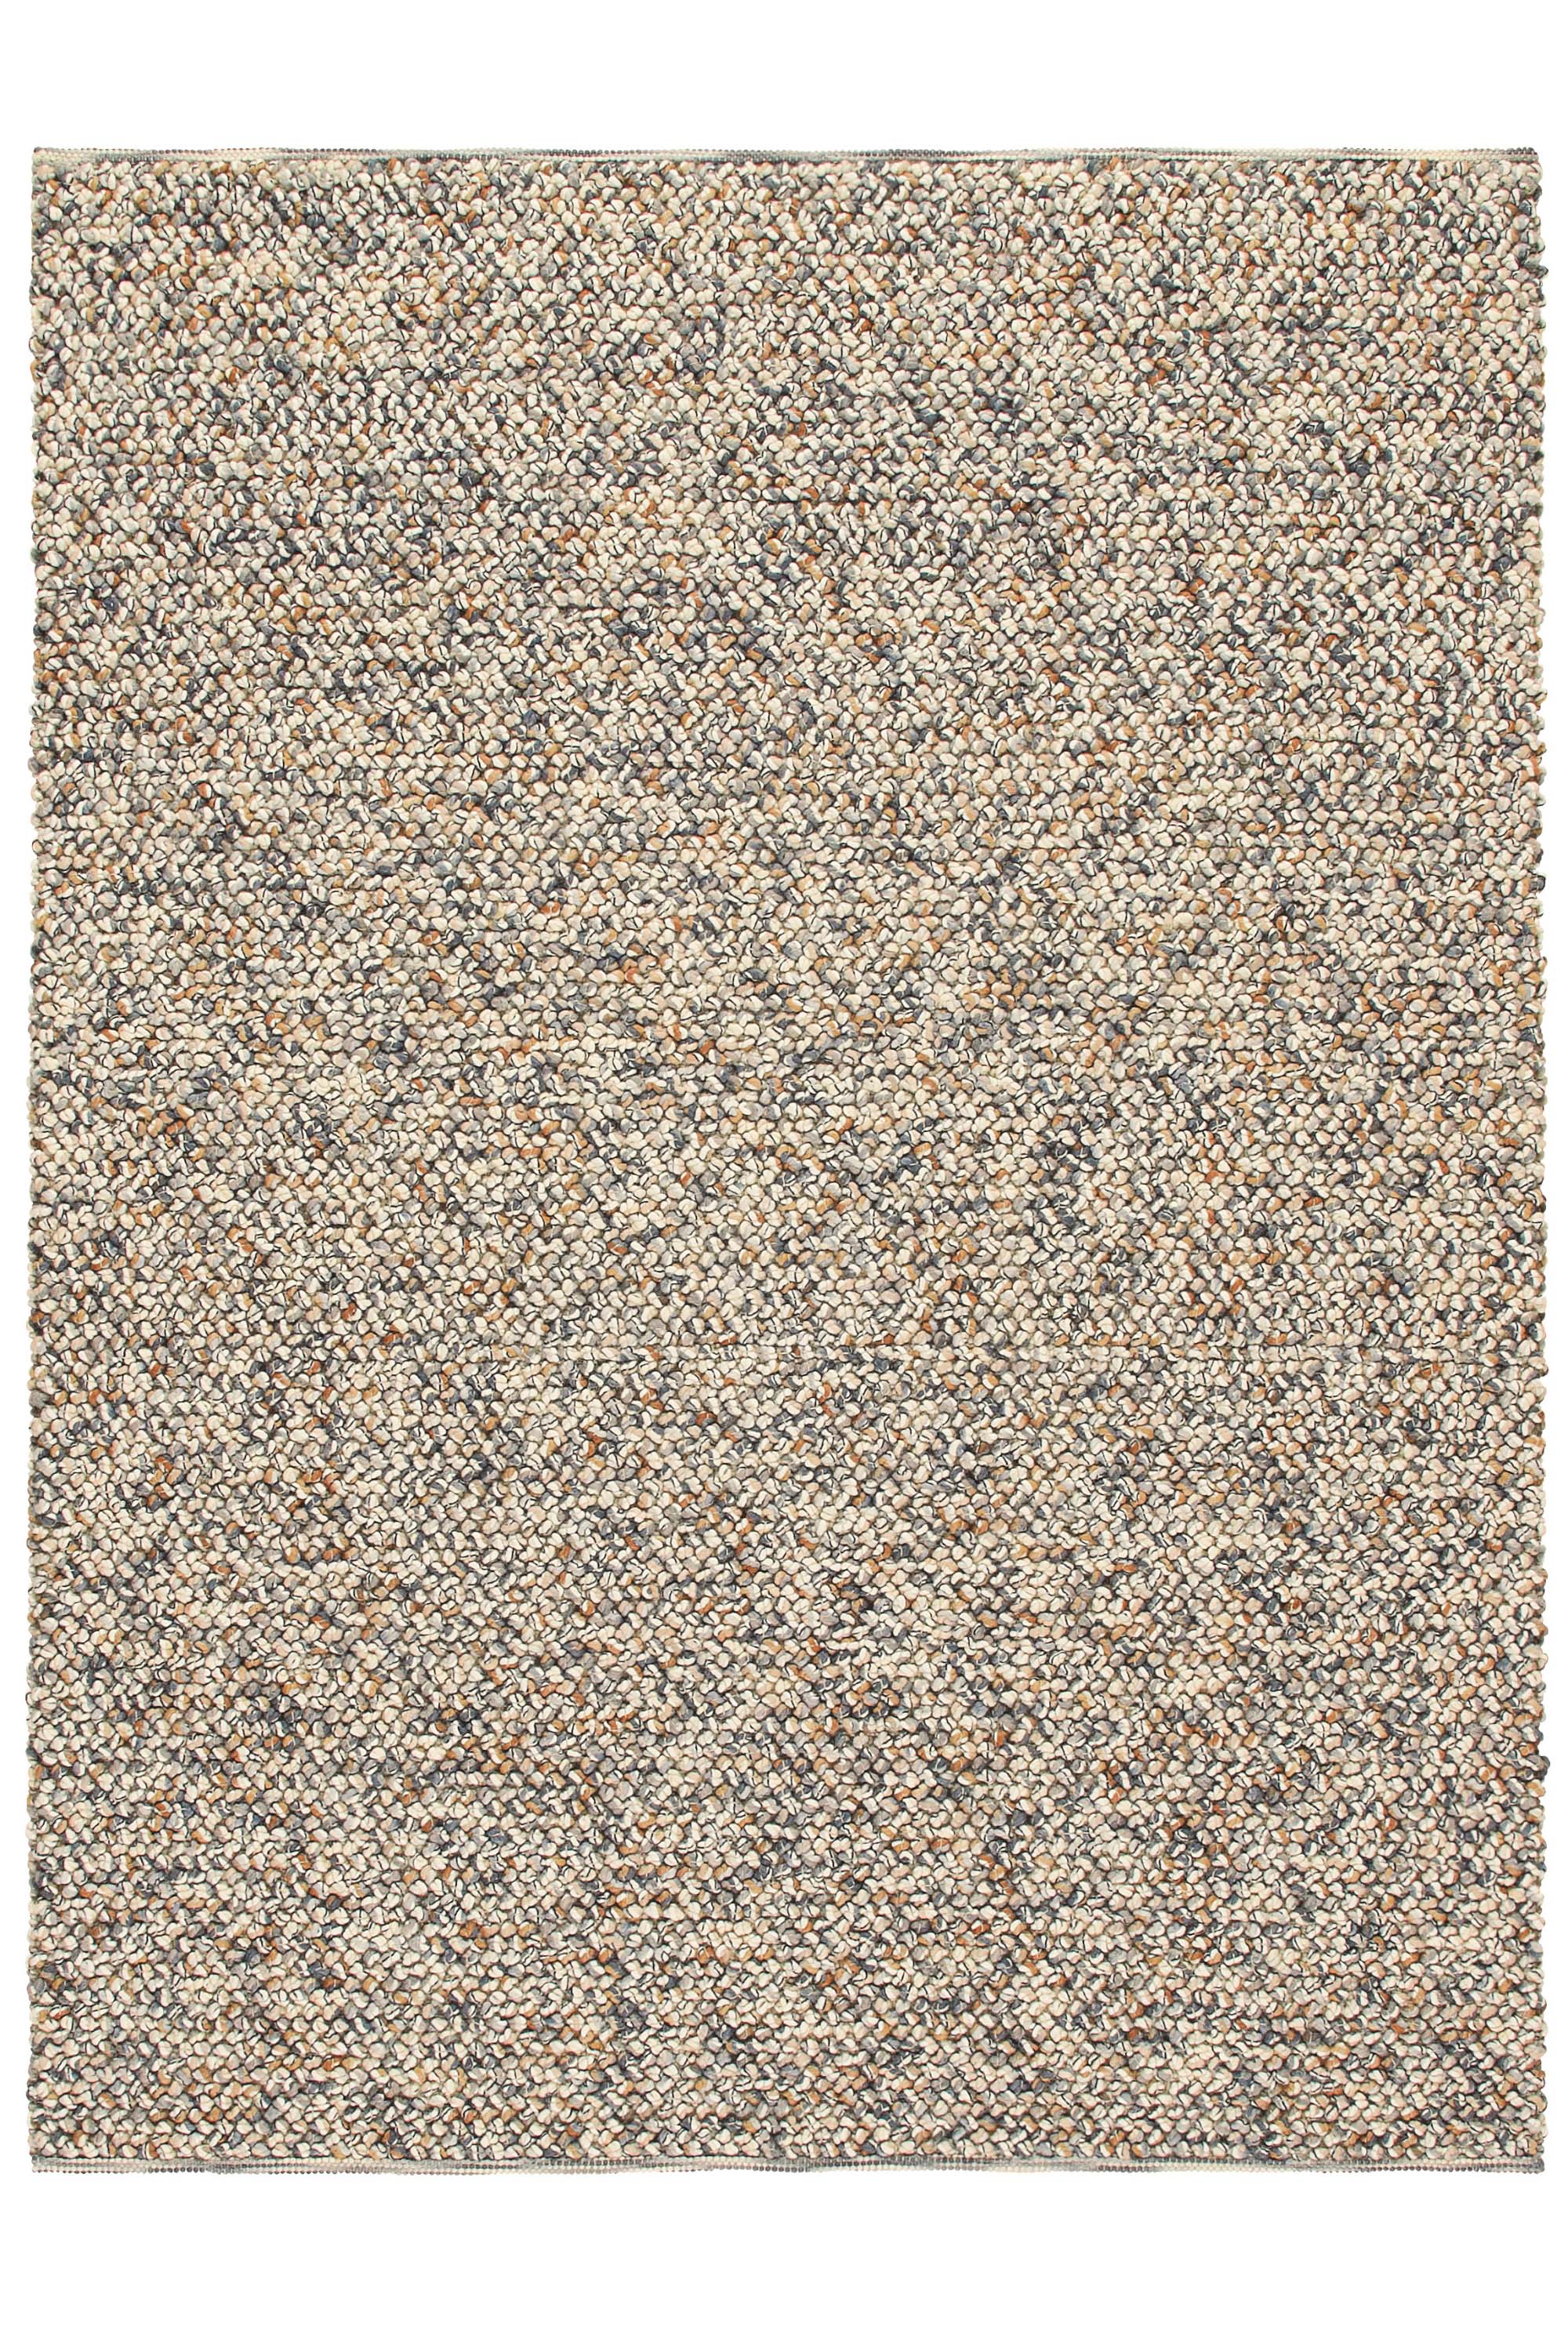 brink and campman brown textured wool and jute rug